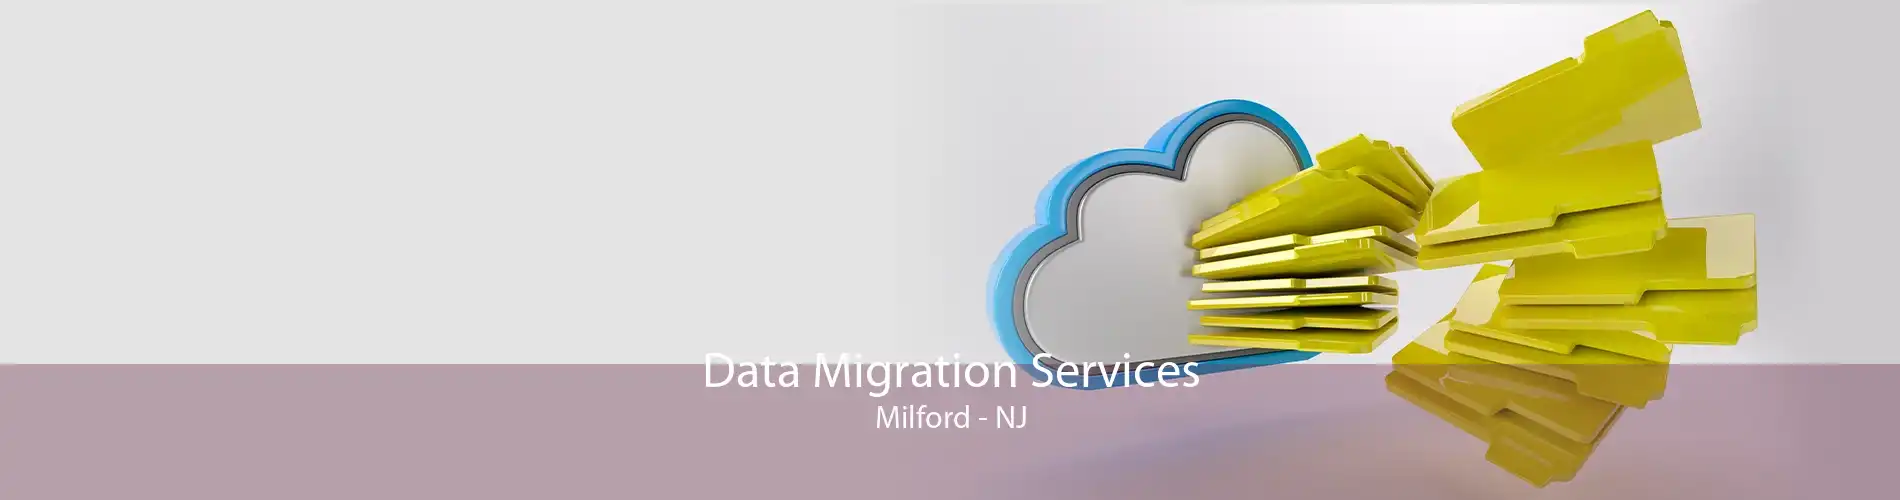 Data Migration Services Milford - NJ